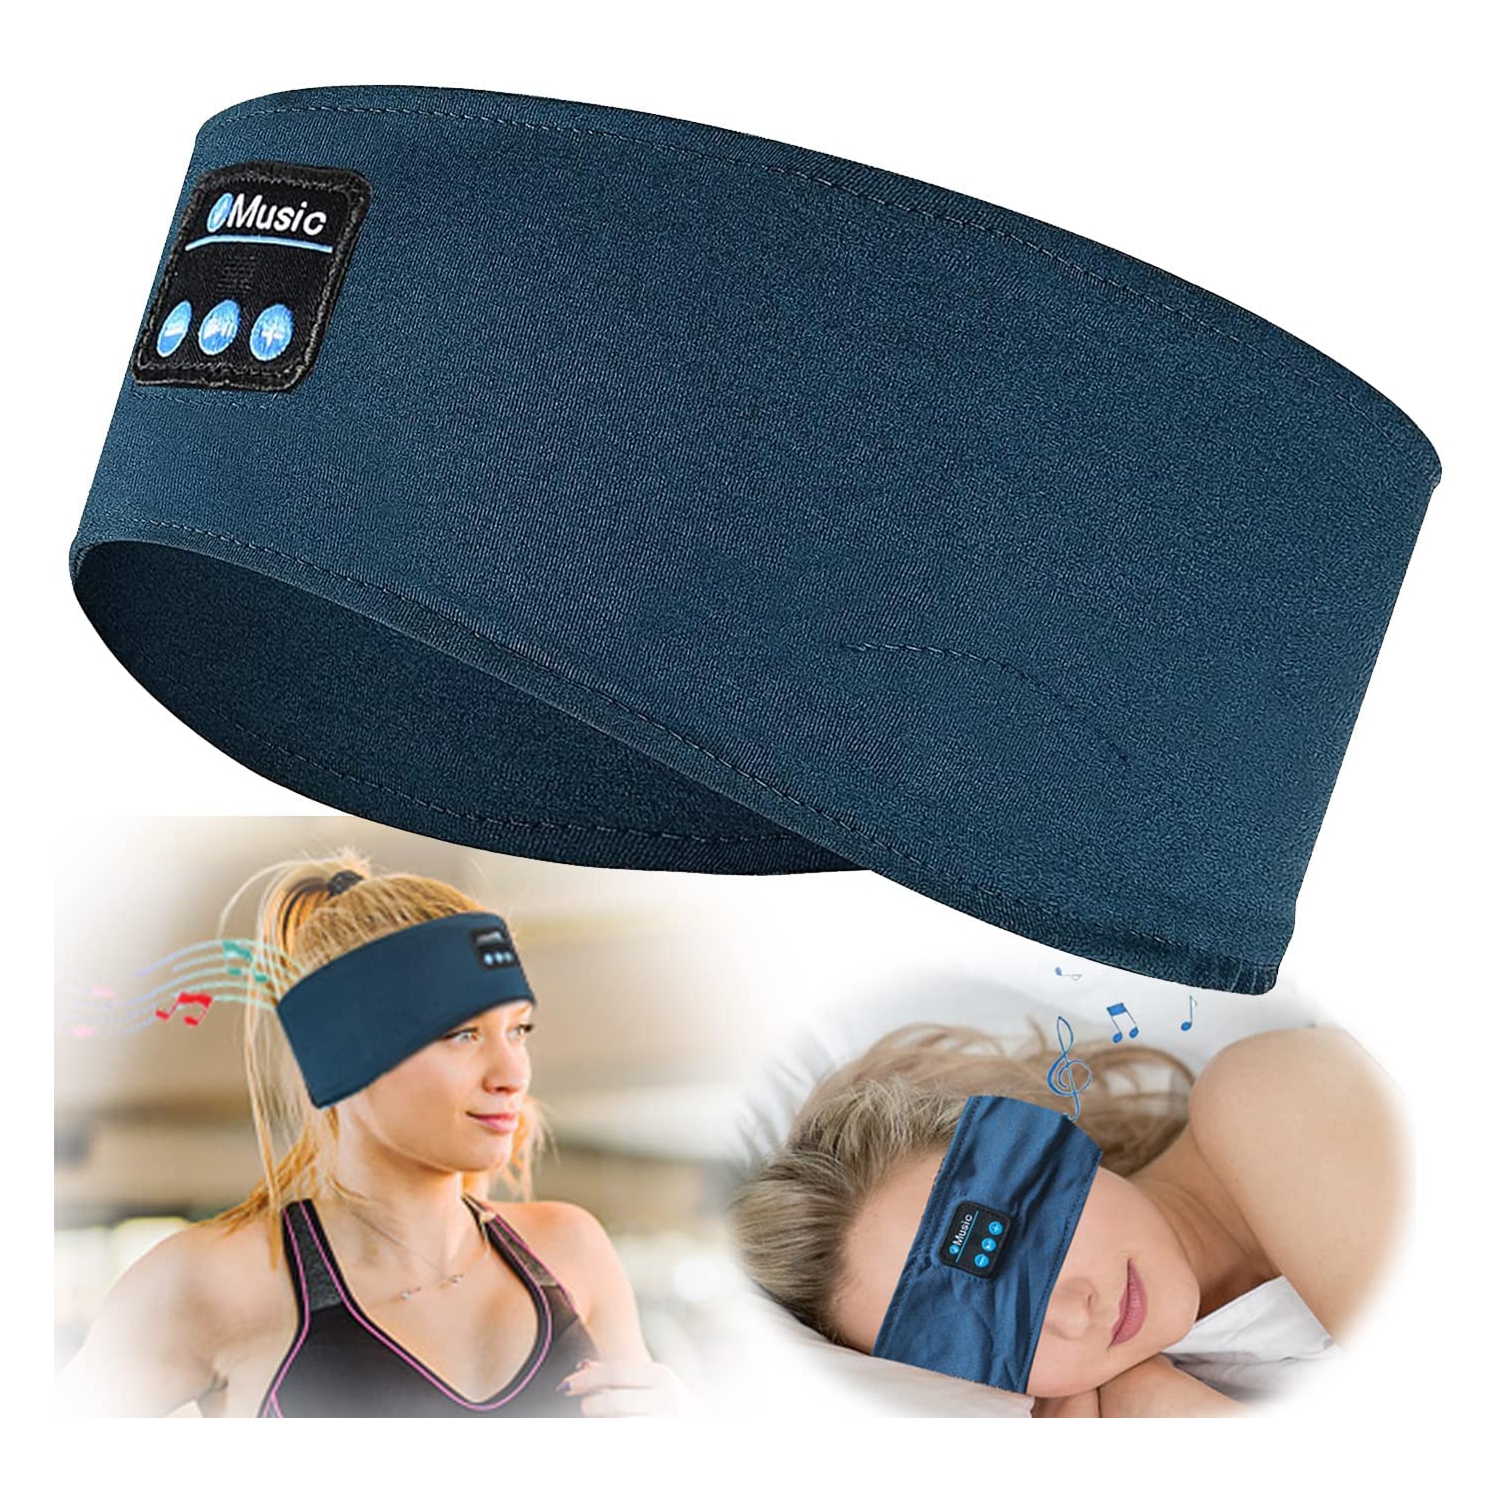 Music Headband Upgrade Sleeping Headbands Headphone Sport Sweatproof Headband Built in Speaker Headset for Workout Yoga Running Gift for Men Women (Blue)